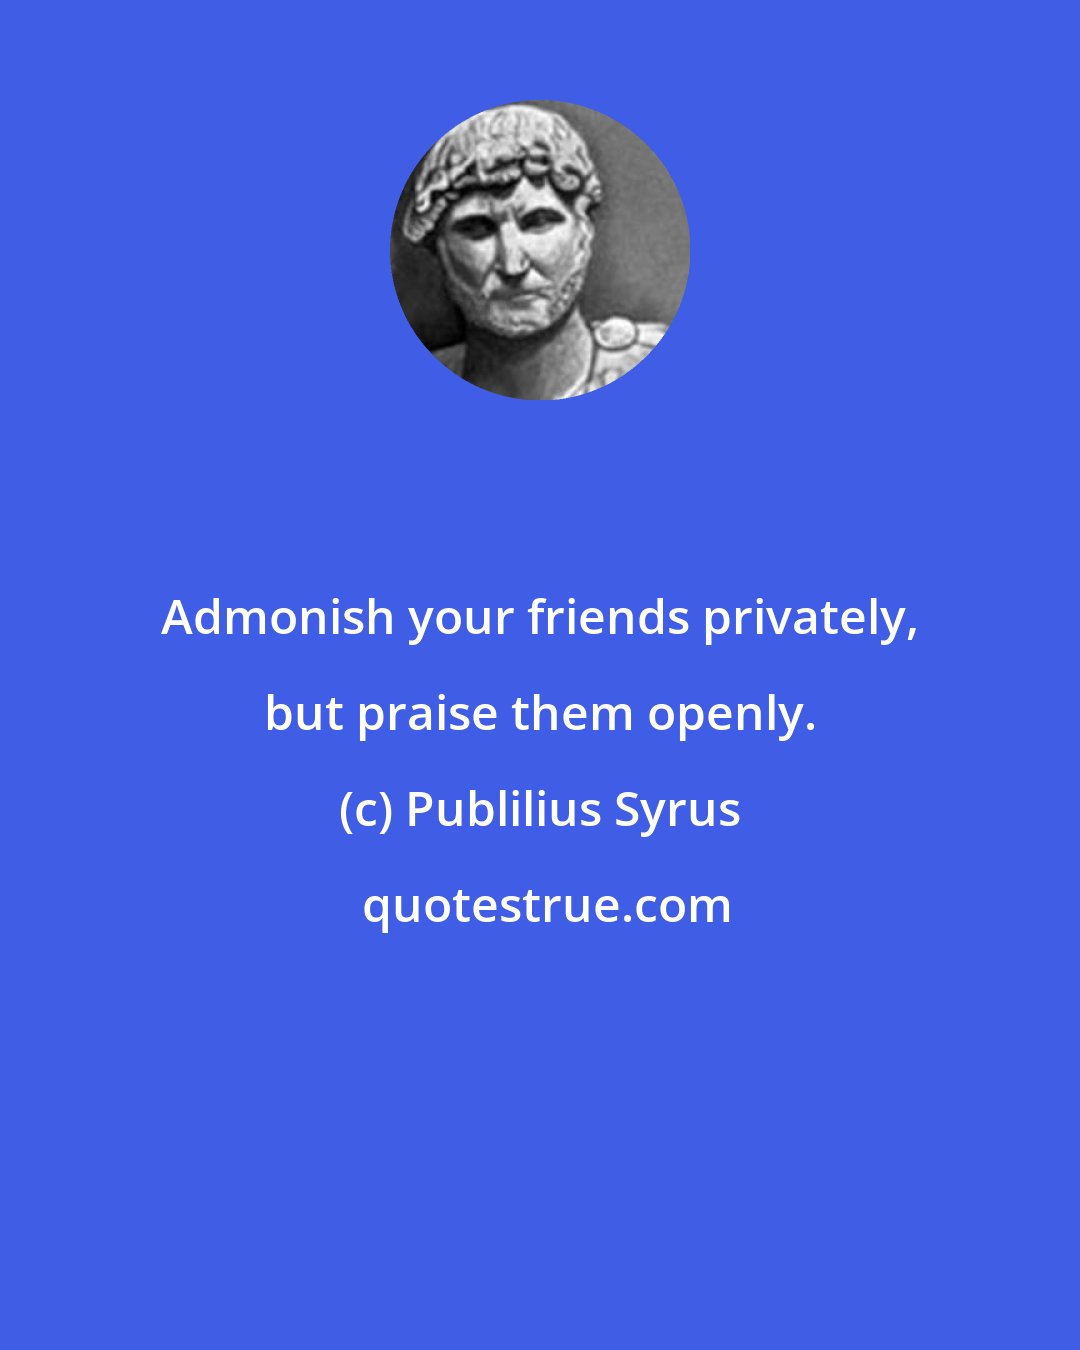 Publilius Syrus: Admonish your friends privately, but praise them openly.